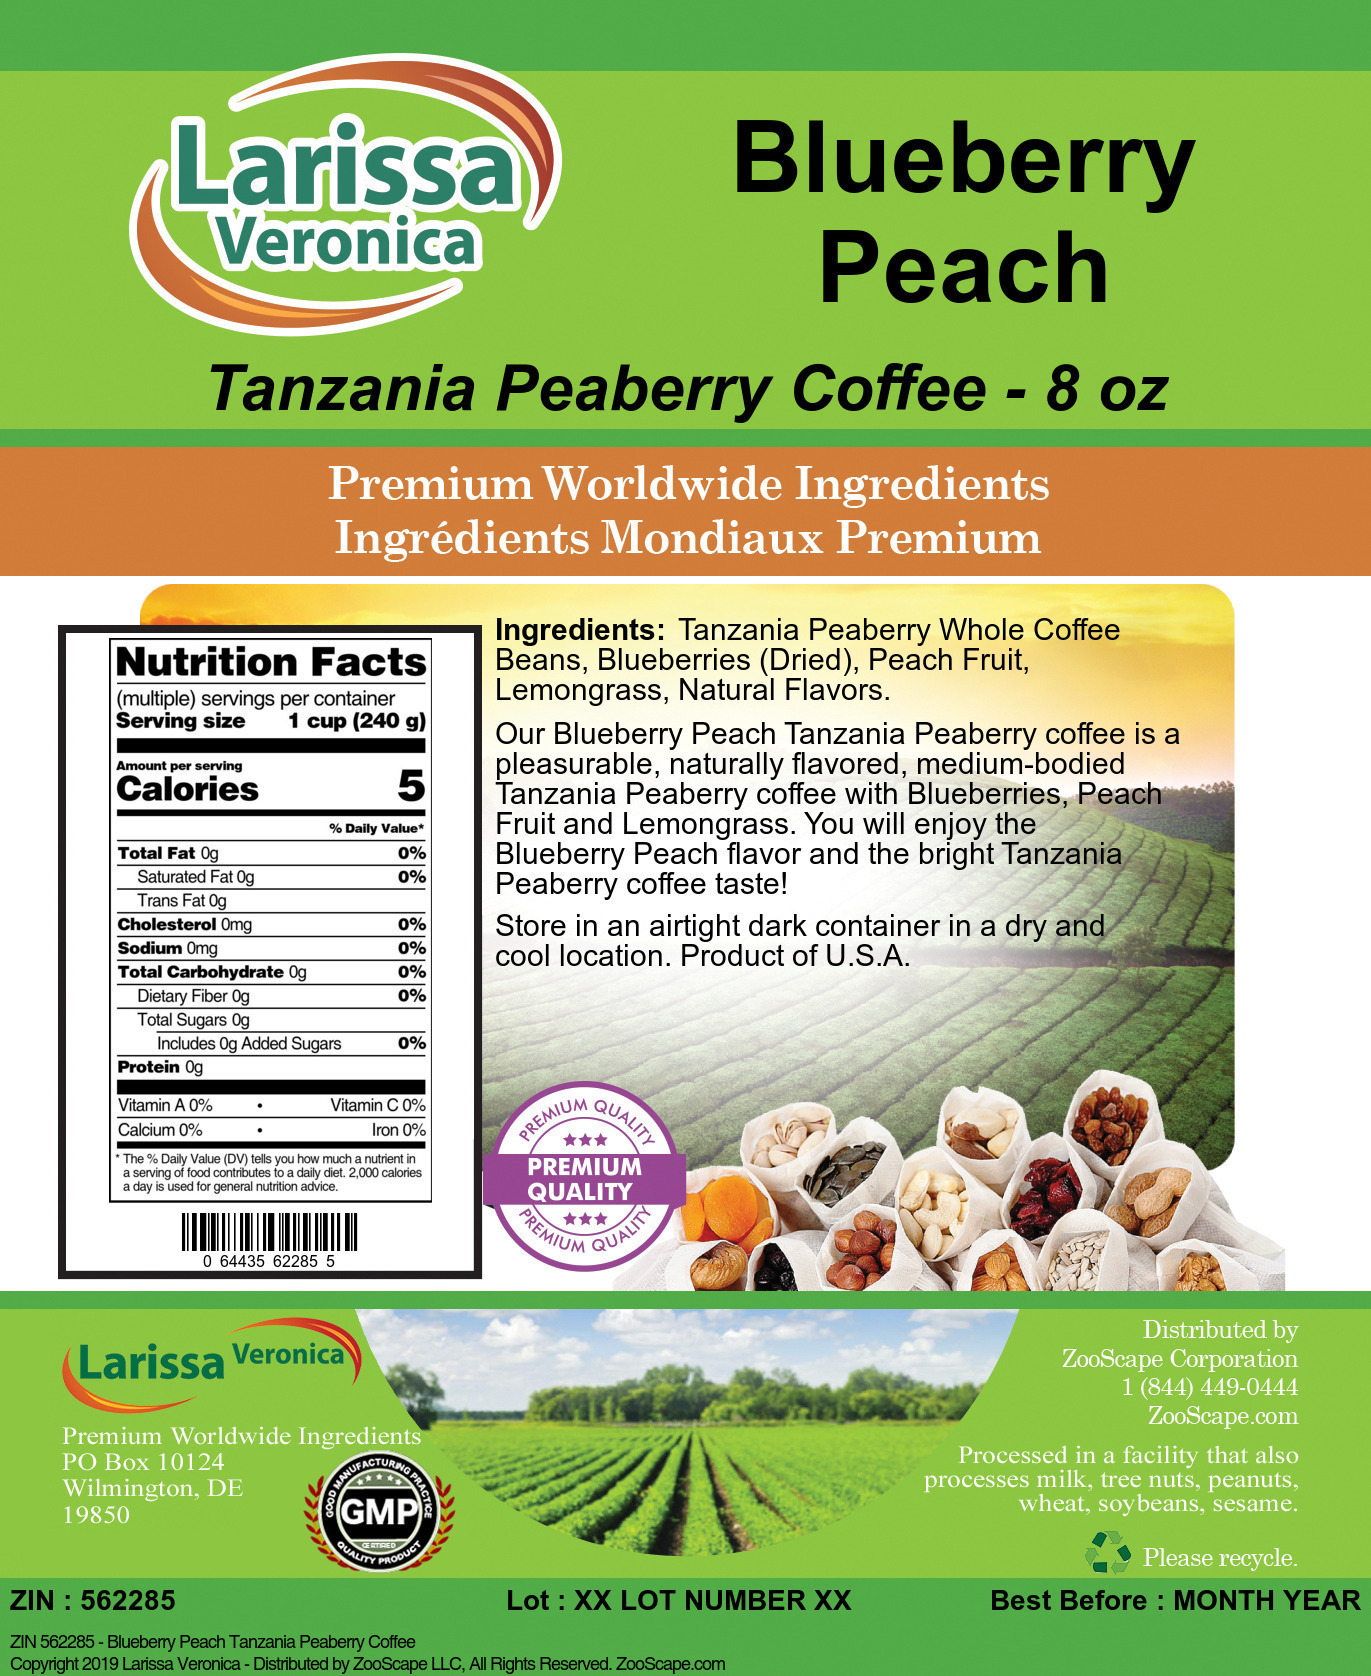 Blueberry Peach Tanzania Peaberry Coffee - Label